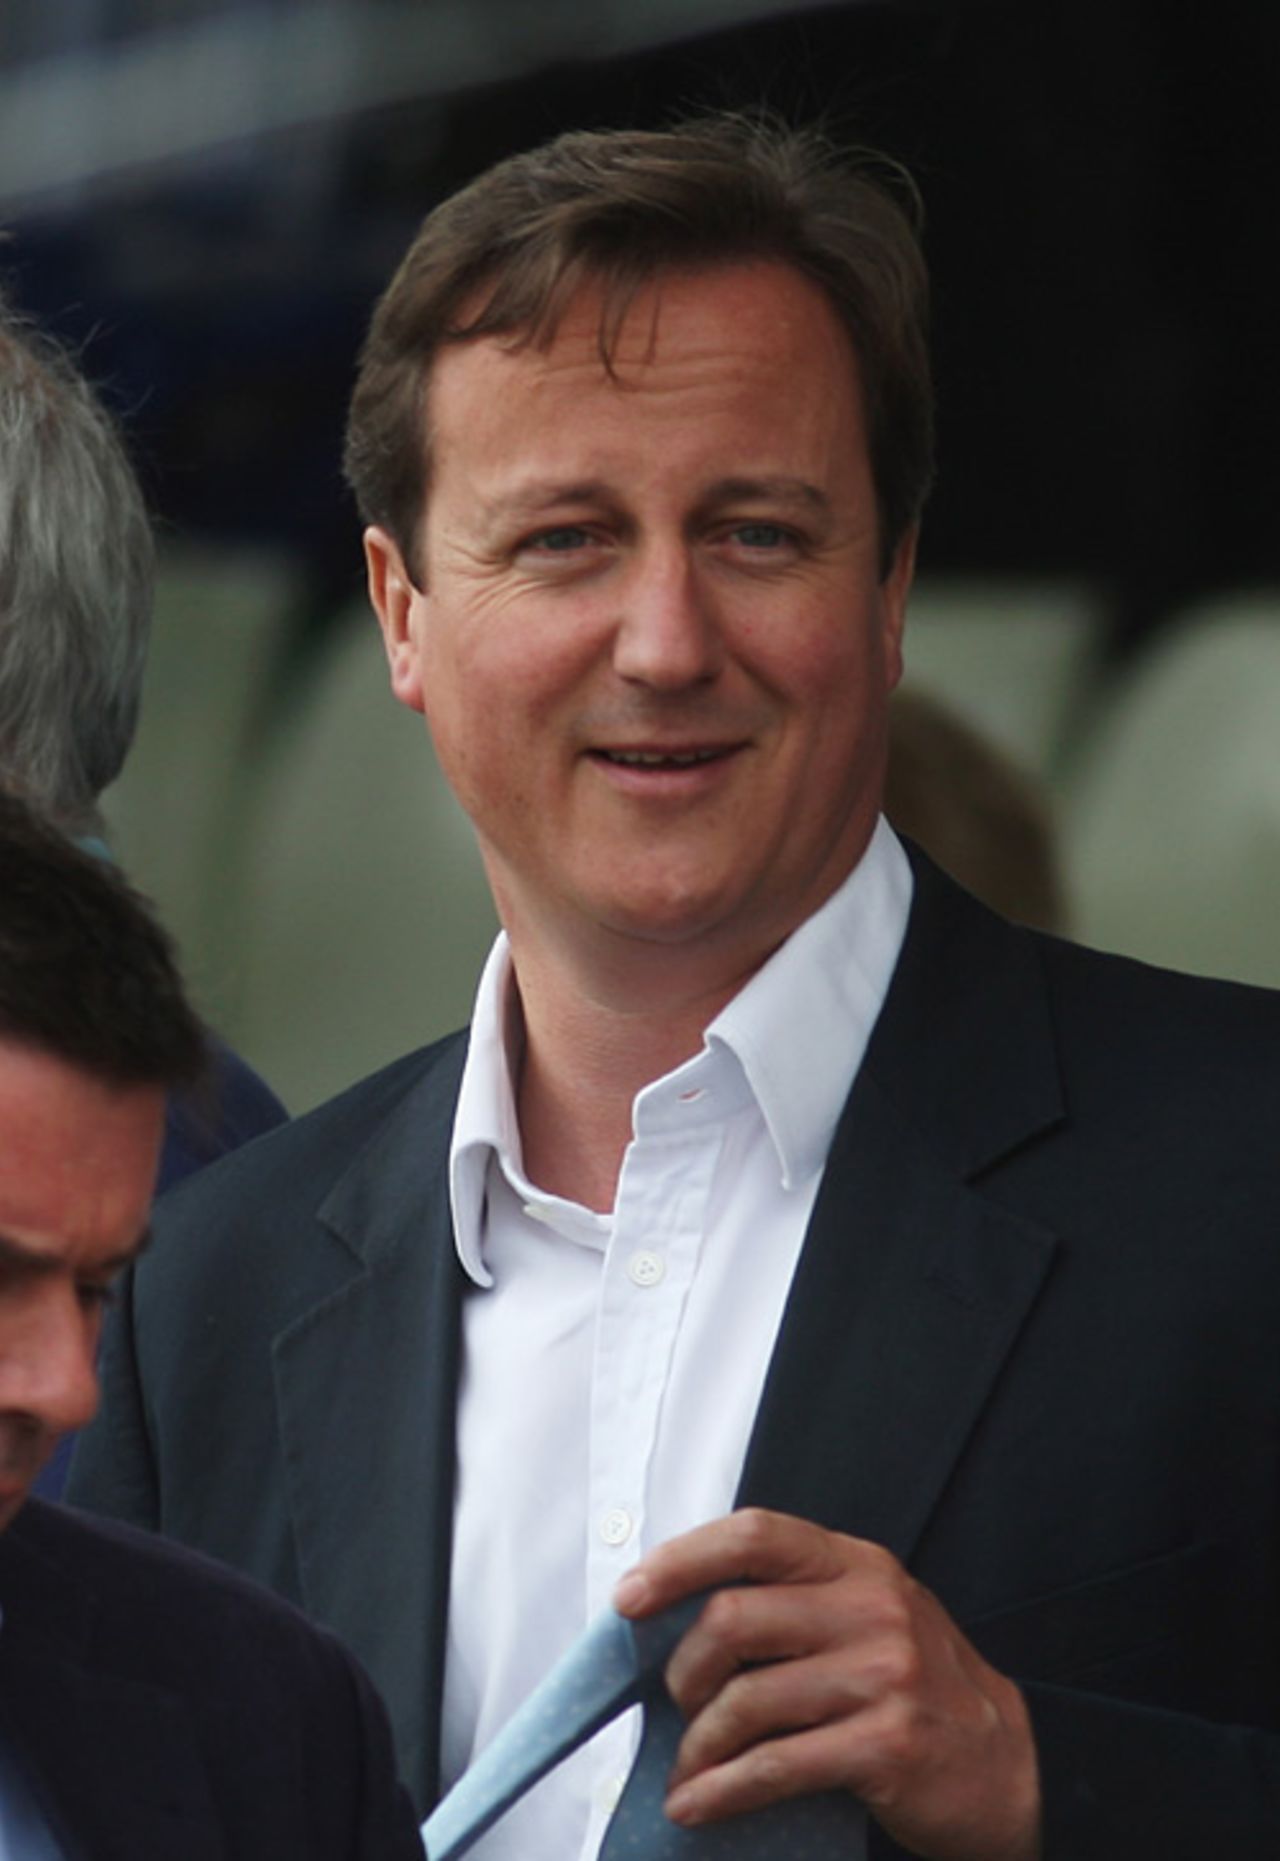 Conservative leader David Cameron waiting for play to start at Edgbaston, England v Australia, 3rd Test, Edgbaston, 1st day, July 30, 2009